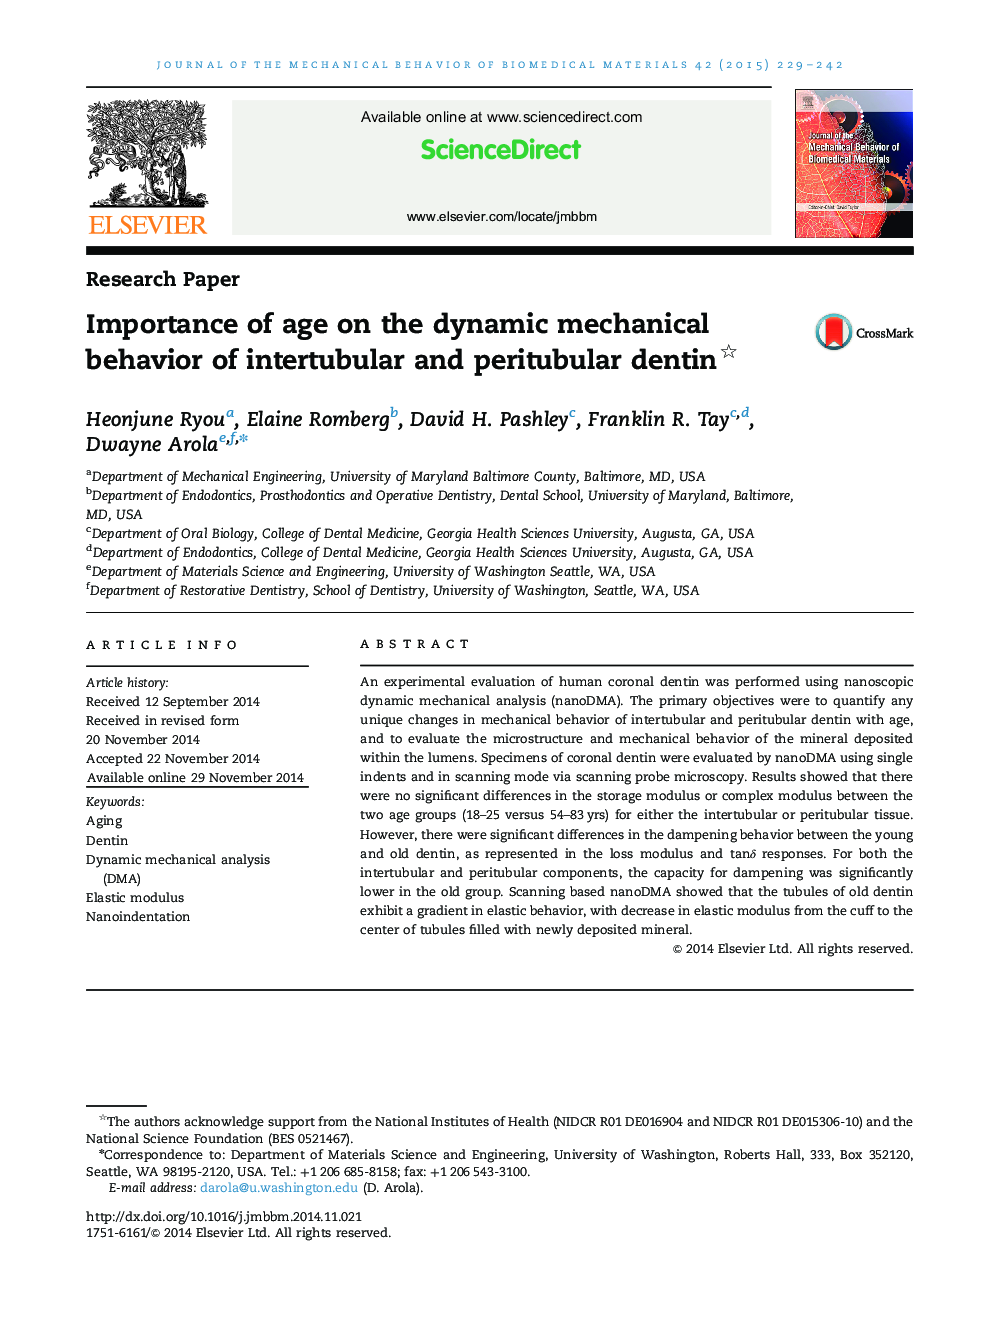 Importance of age on the dynamic mechanical behavior of intertubular and peritubular dentin